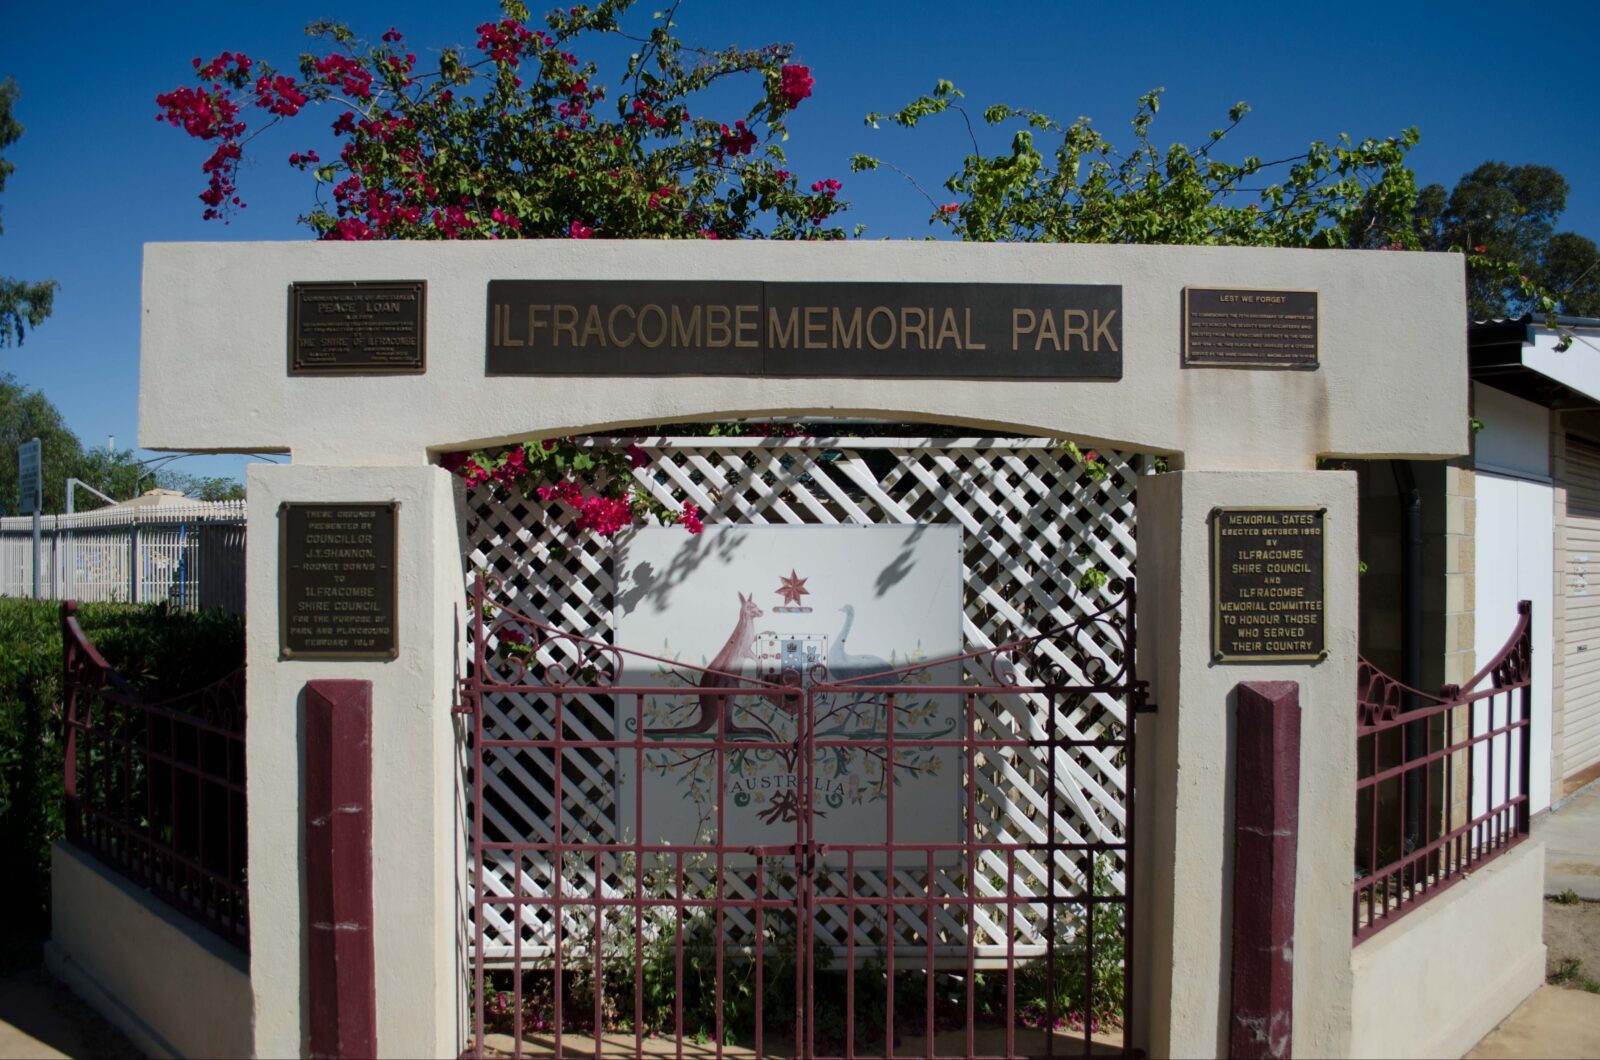 Ilfracombe Memorial Park